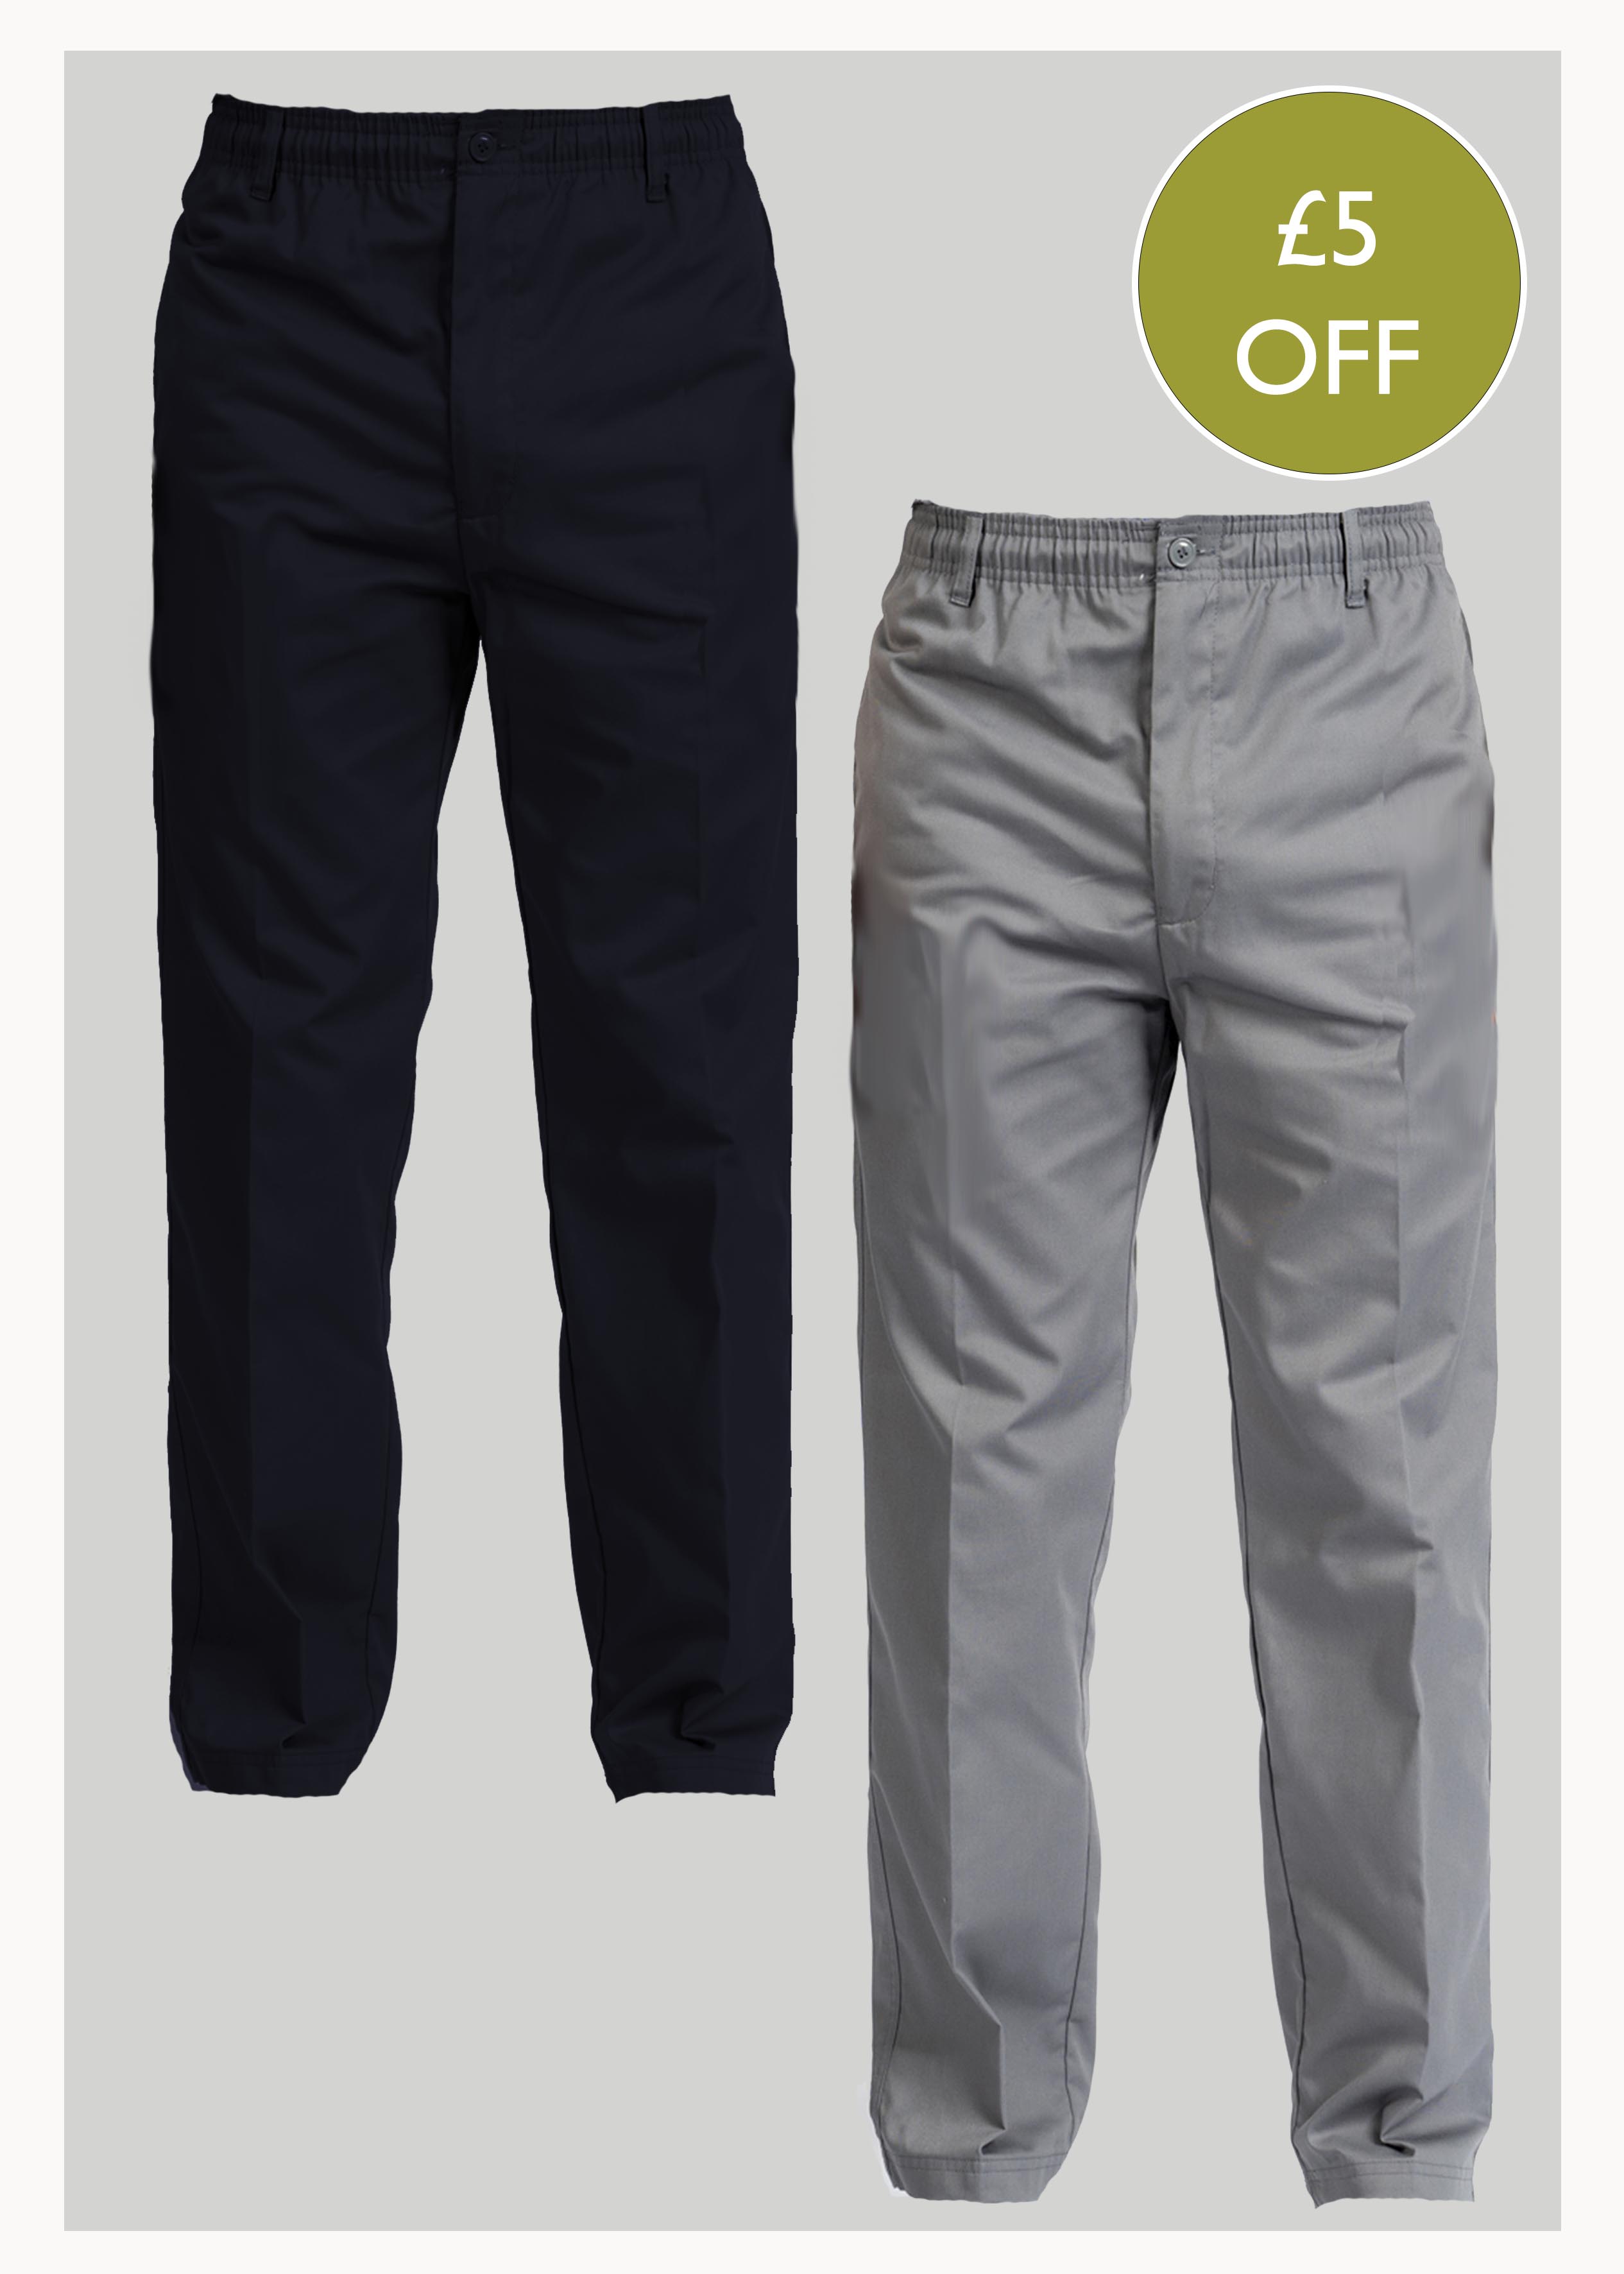 2 Pack Men's Elastic Waist Pull-On Trousers Bundle - Navy/Grey